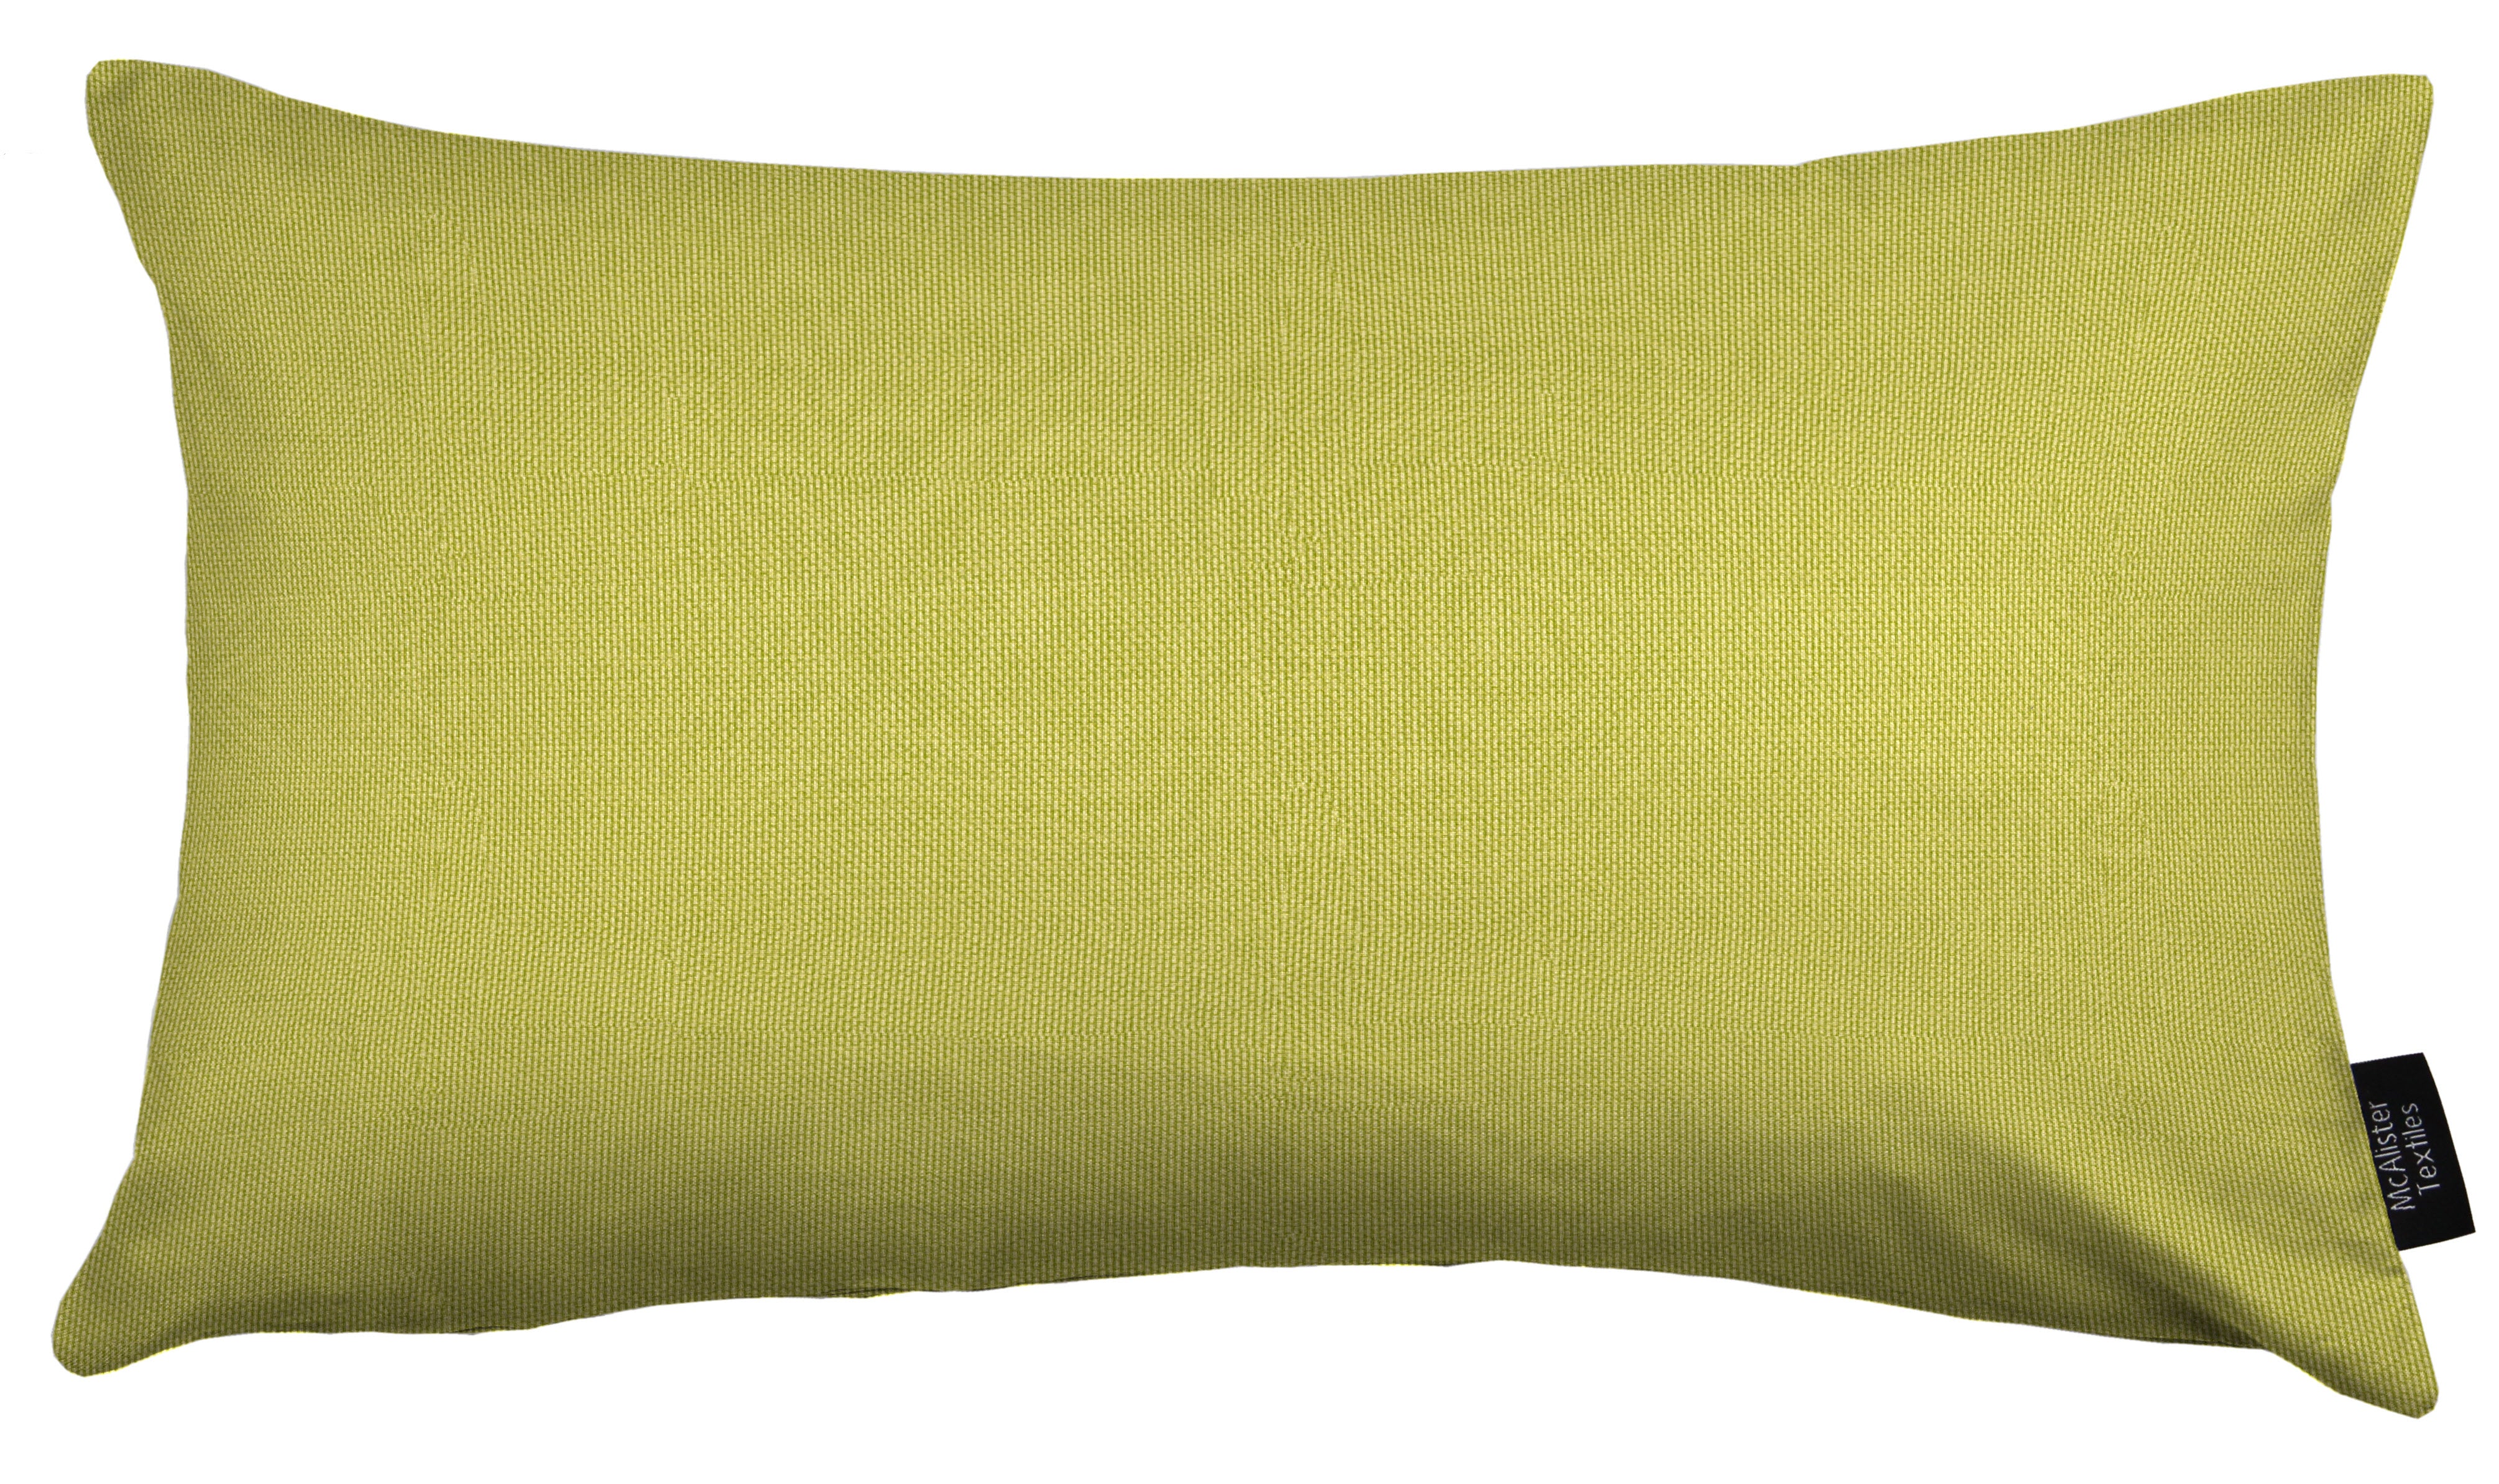 McAlister Textiles Sorrento Sage Green Outdoor Pillows Pillow Cover Only 50cm x 30cm 